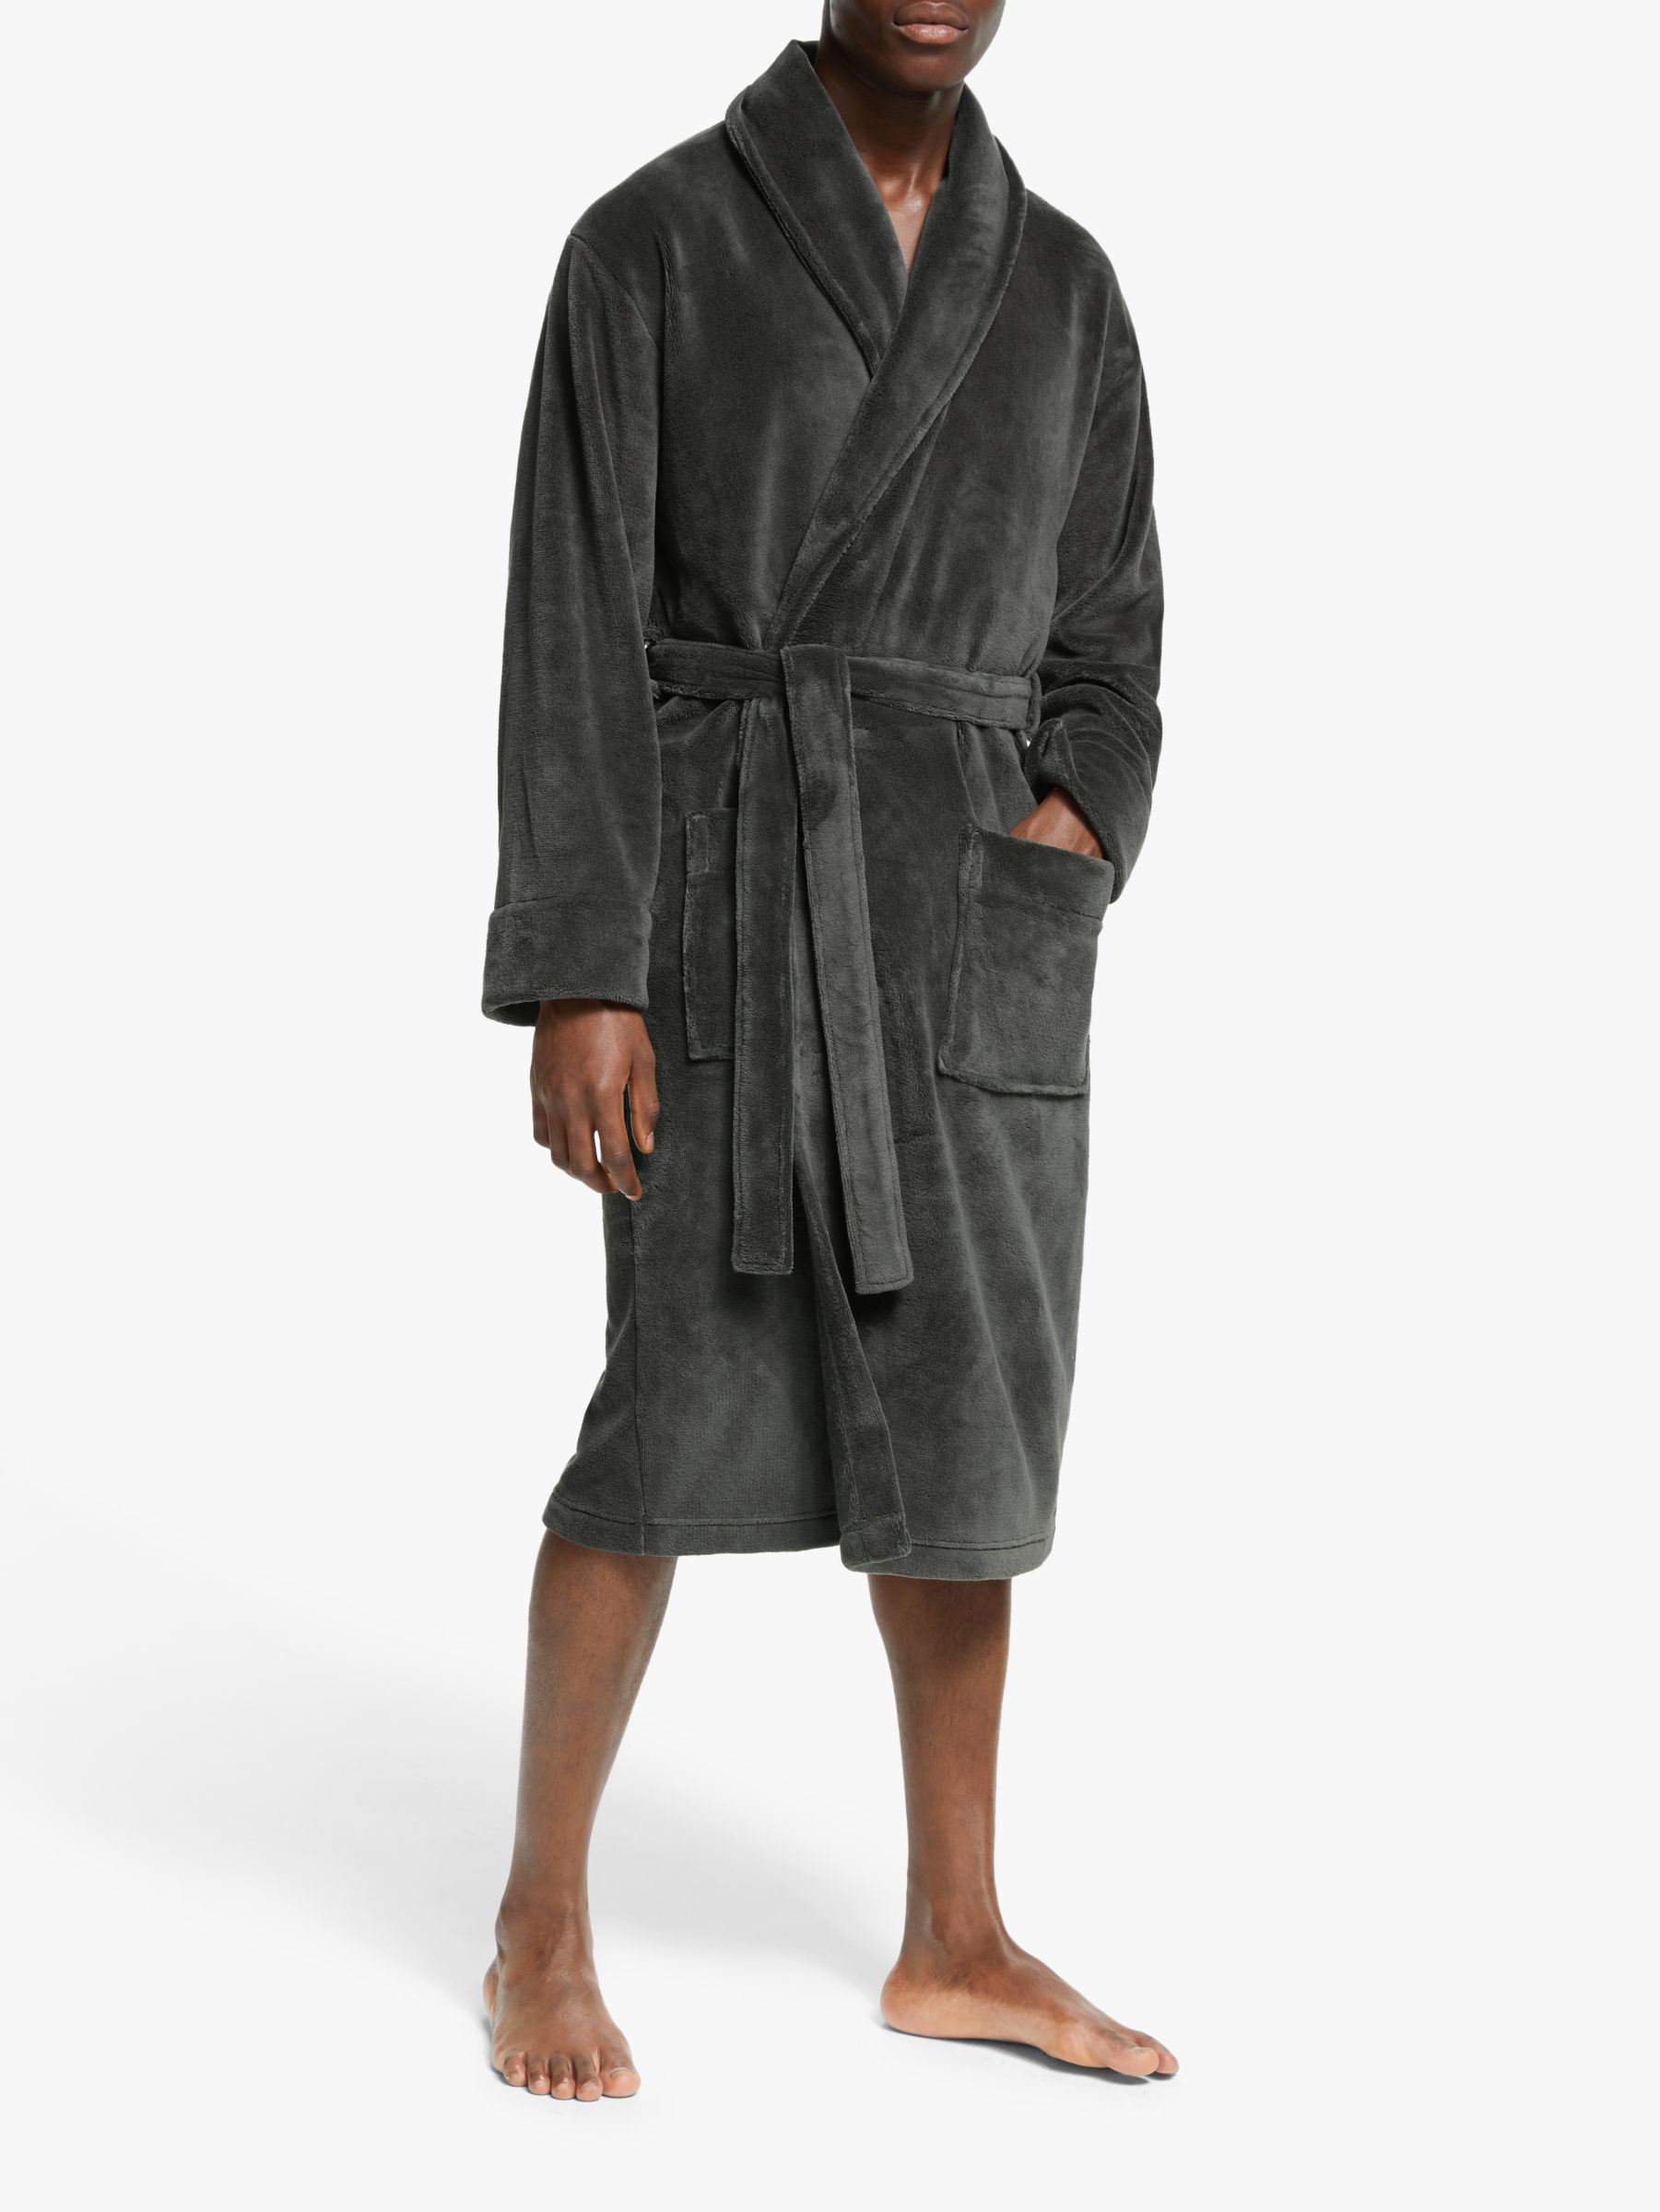 John Lewis & Partners Sheared Fleece Robe, Grey, M